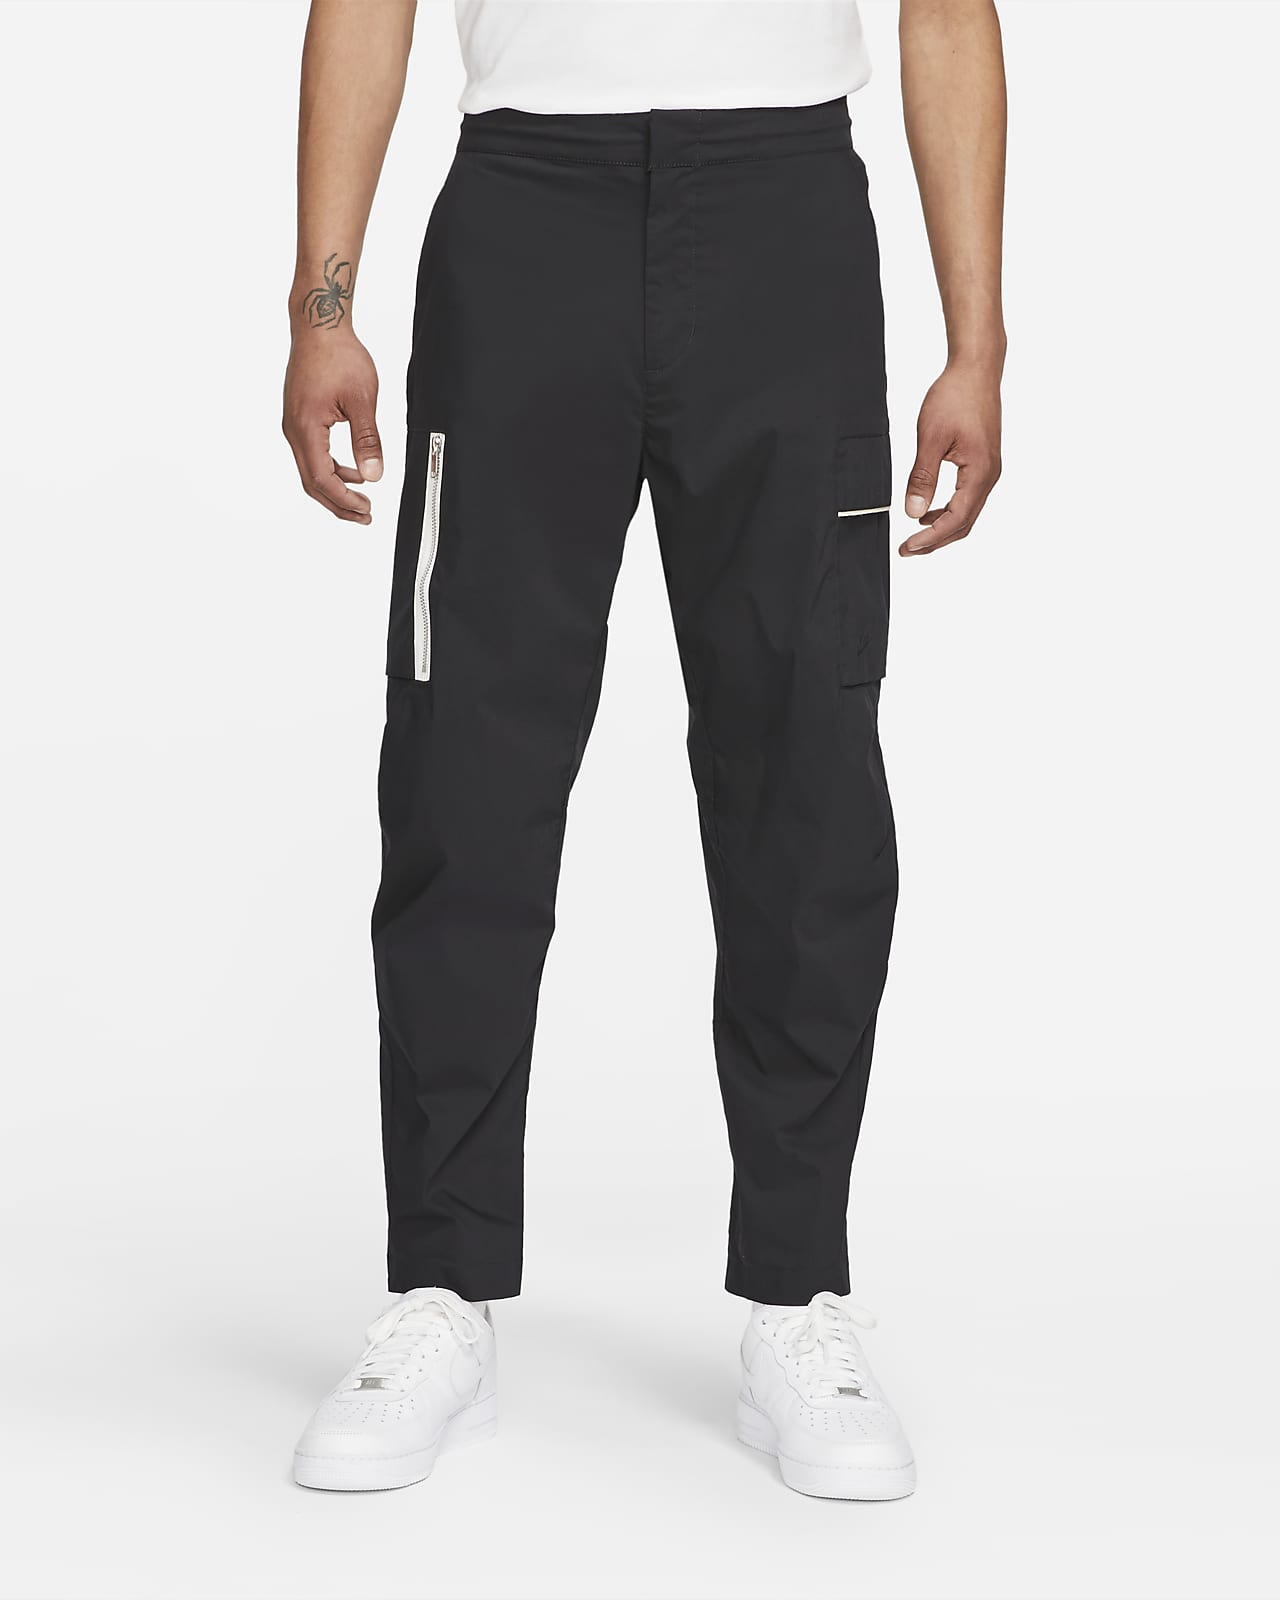 Wizard gesture Joseph Banks Nike Sportswear Style Essentials Men's Woven Unlined Cargo Pants. Nike.com